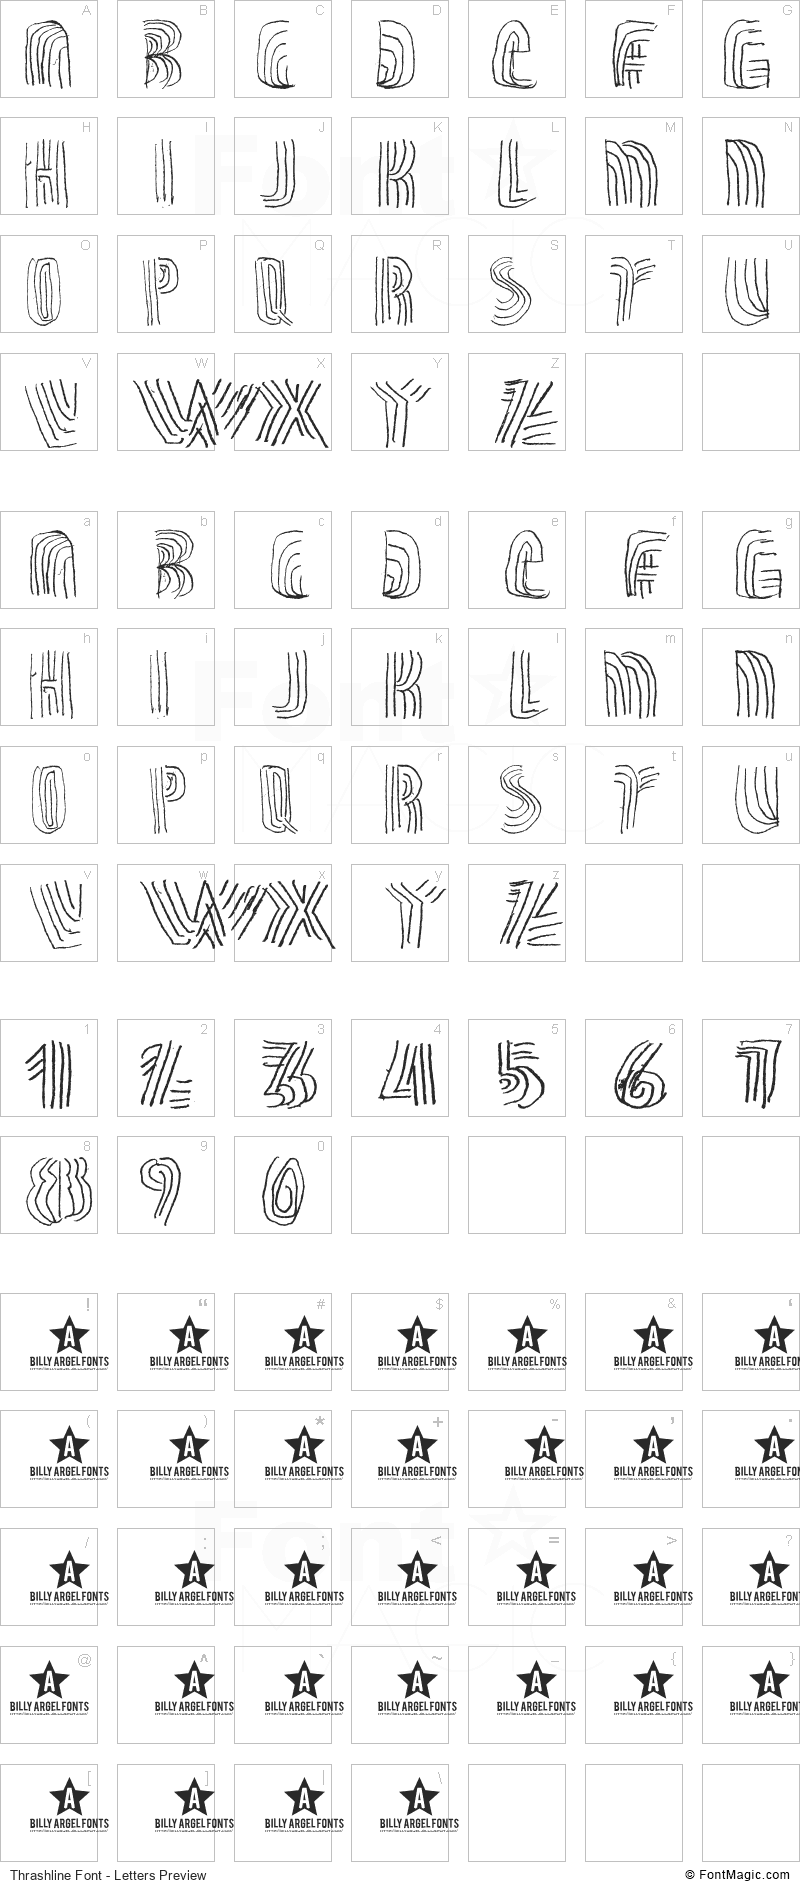 Thrashline Font - All Latters Preview Chart